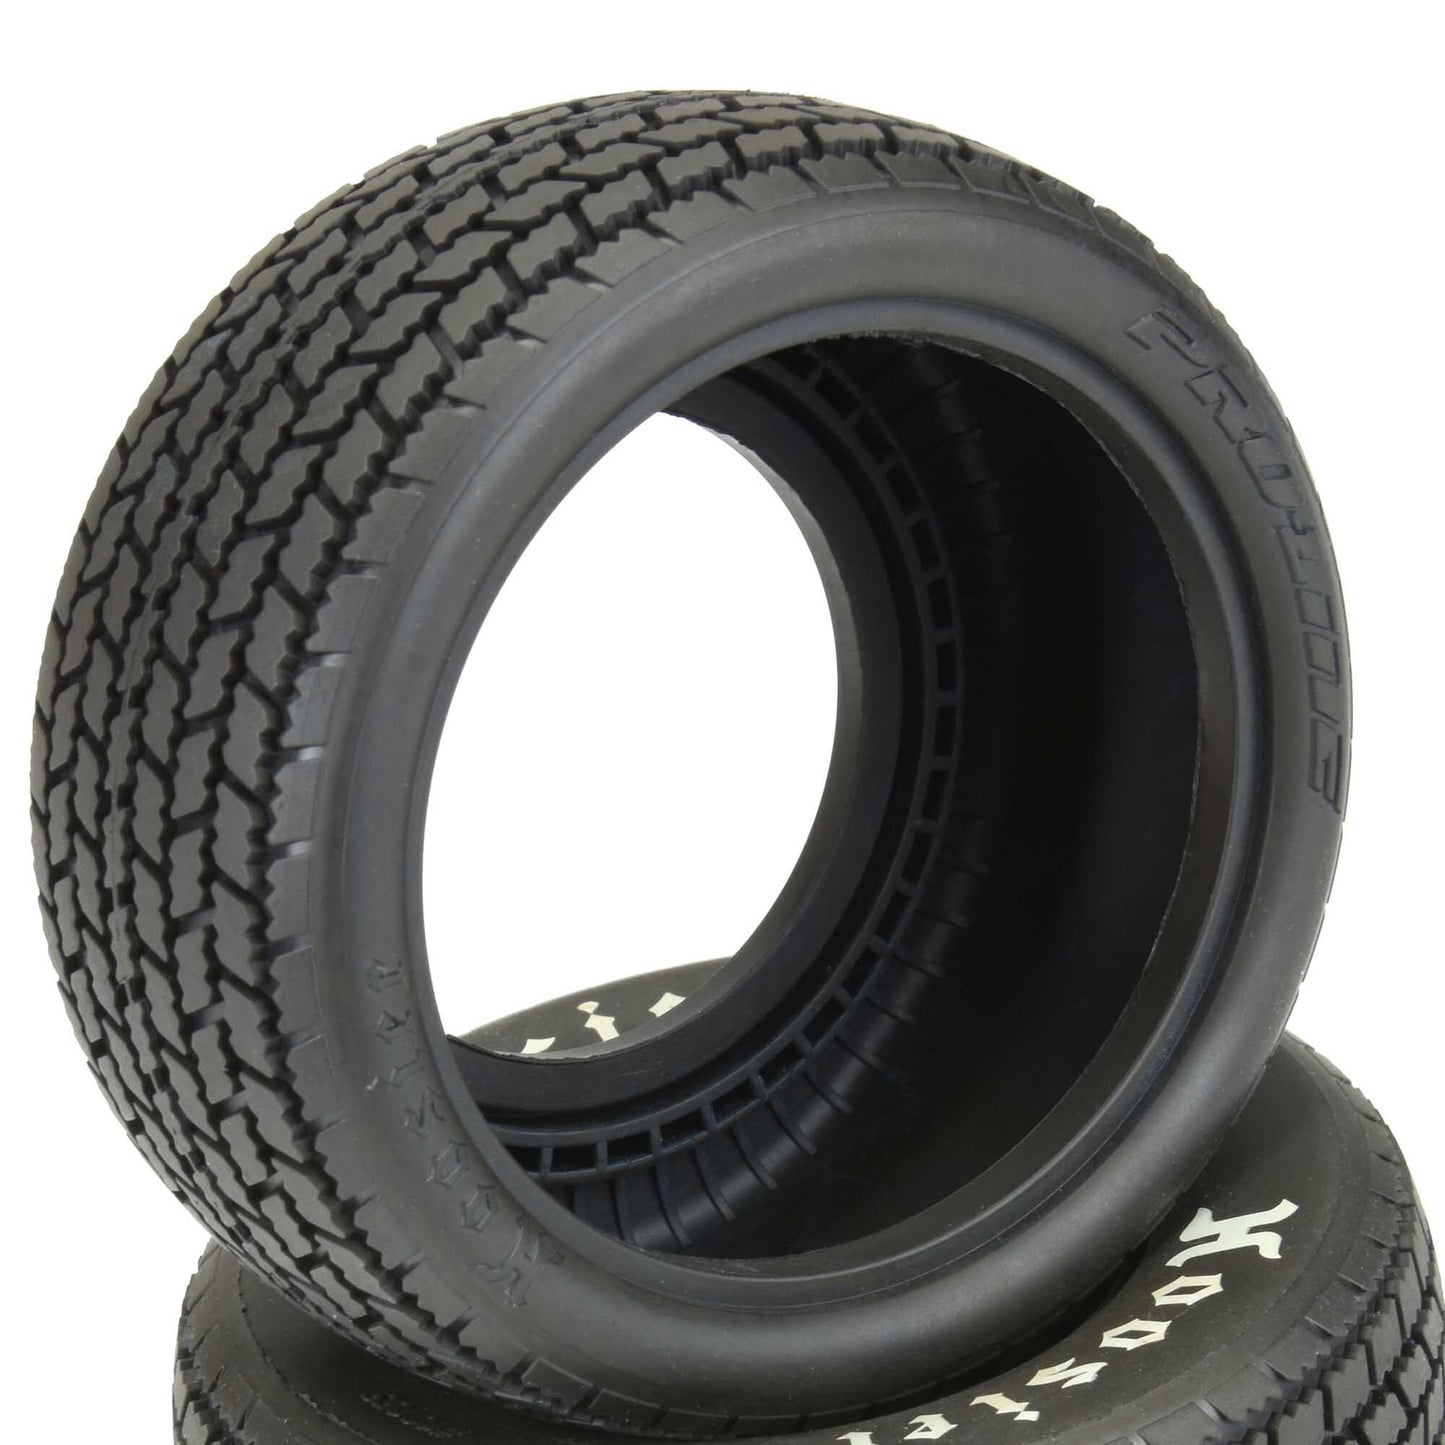 1/10 Pro-Line Hoosier G60 M3 Fr/Rr 2.2"/3.0" Dirt Oval Short Course Tires (2)